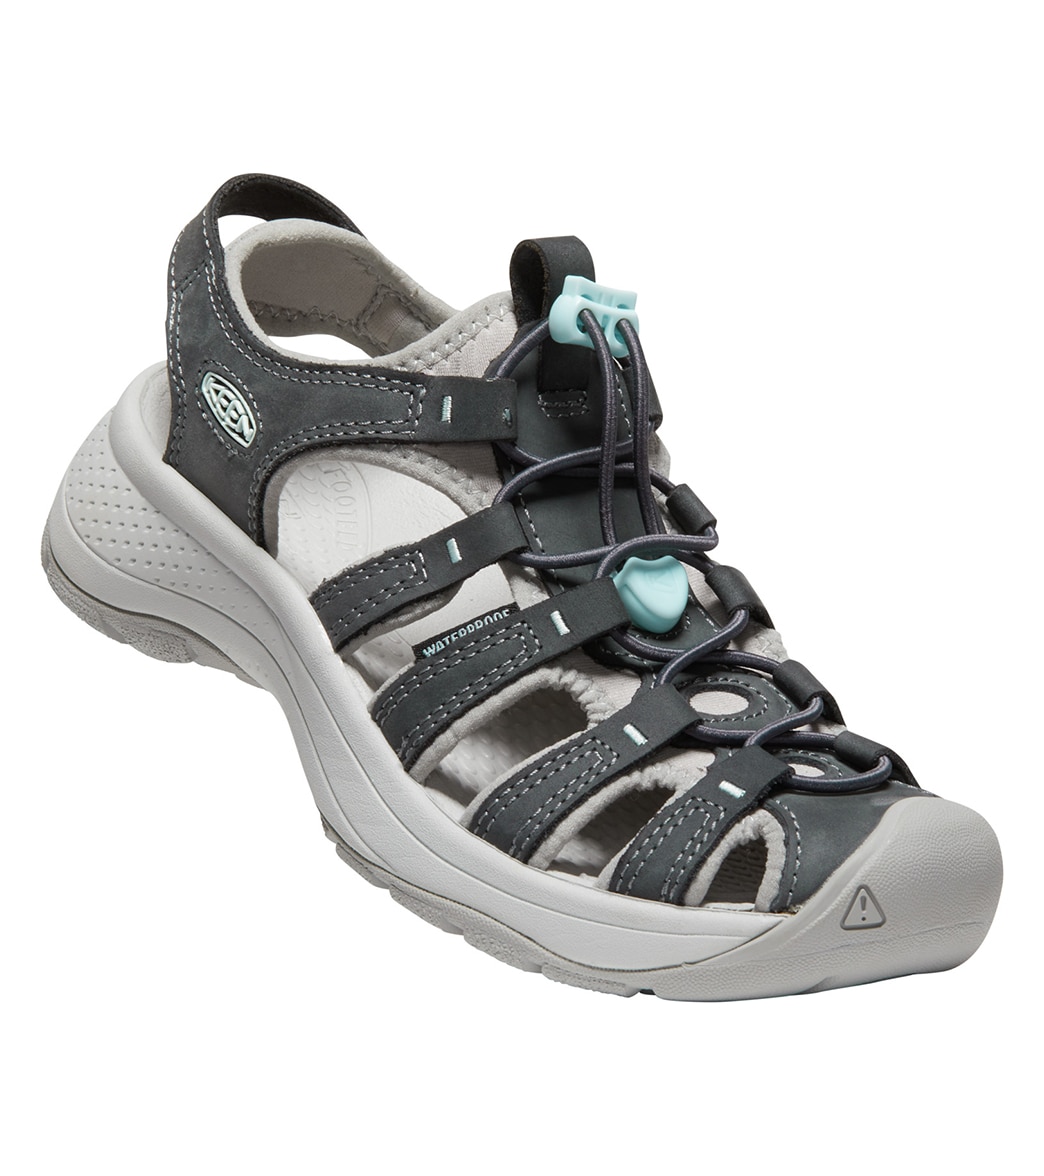 Keen Women's Astoria West Leather Water Shoes - Magnet/Vapor 10 - Swimoutlet.com